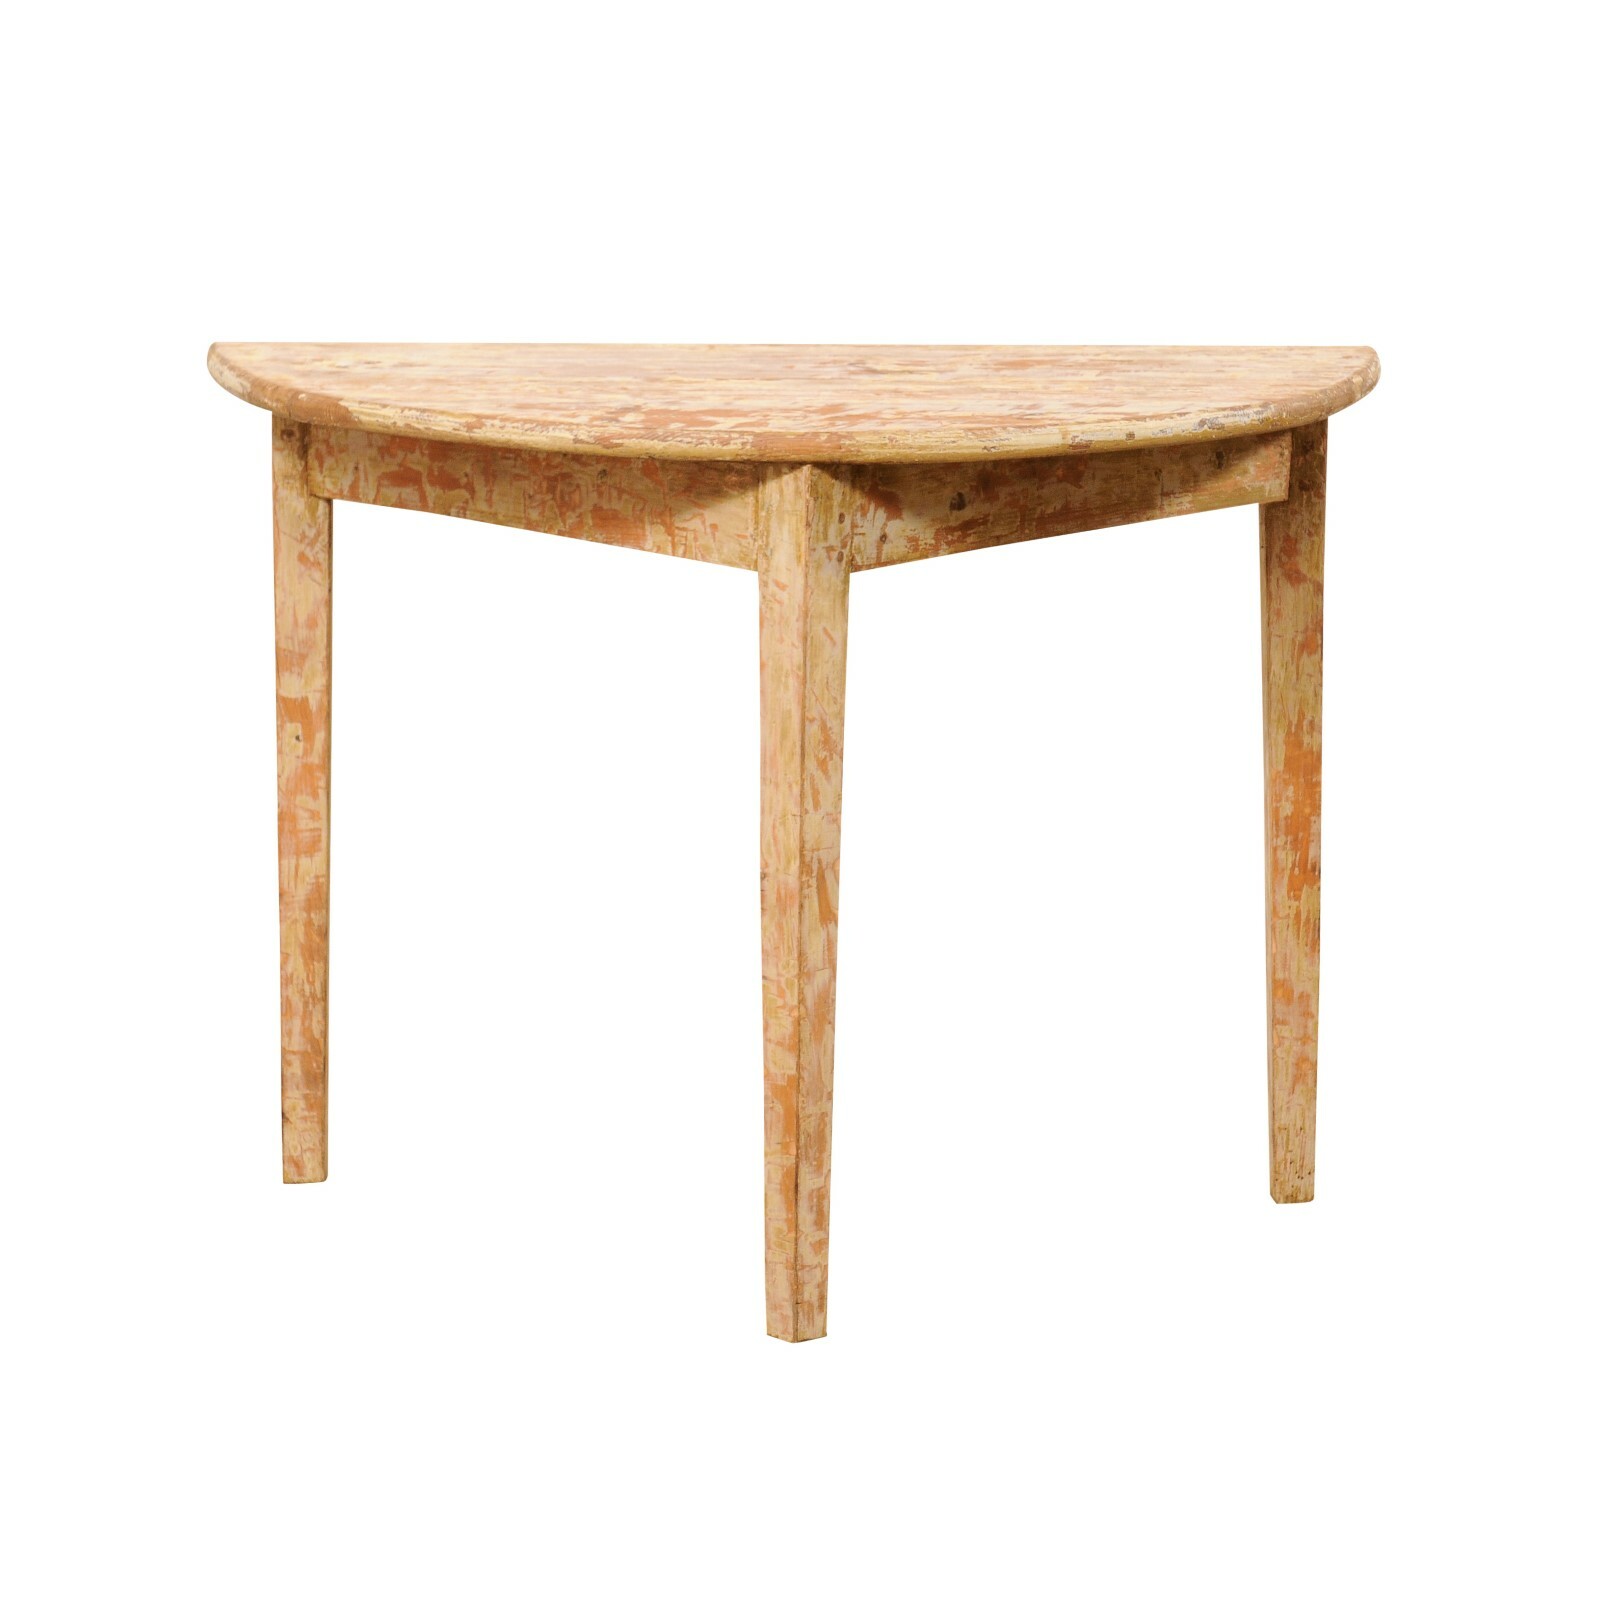 Swedish Wooden Demi-Lune Table, 19th C.